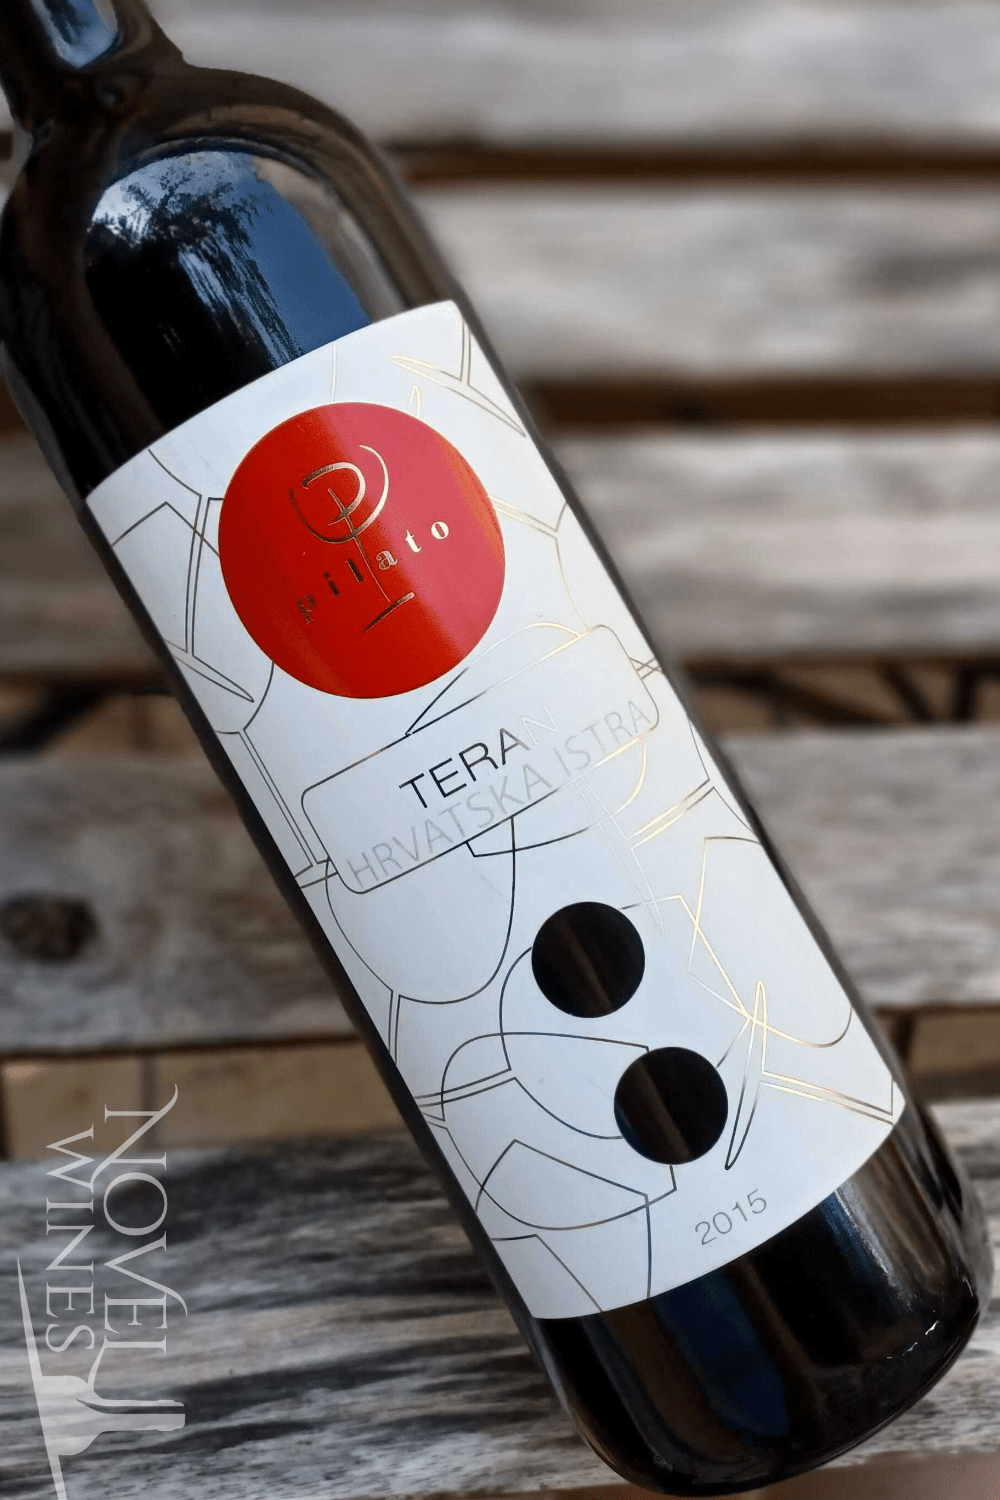 Novel Wines Pilato Teran 2015, Croatia